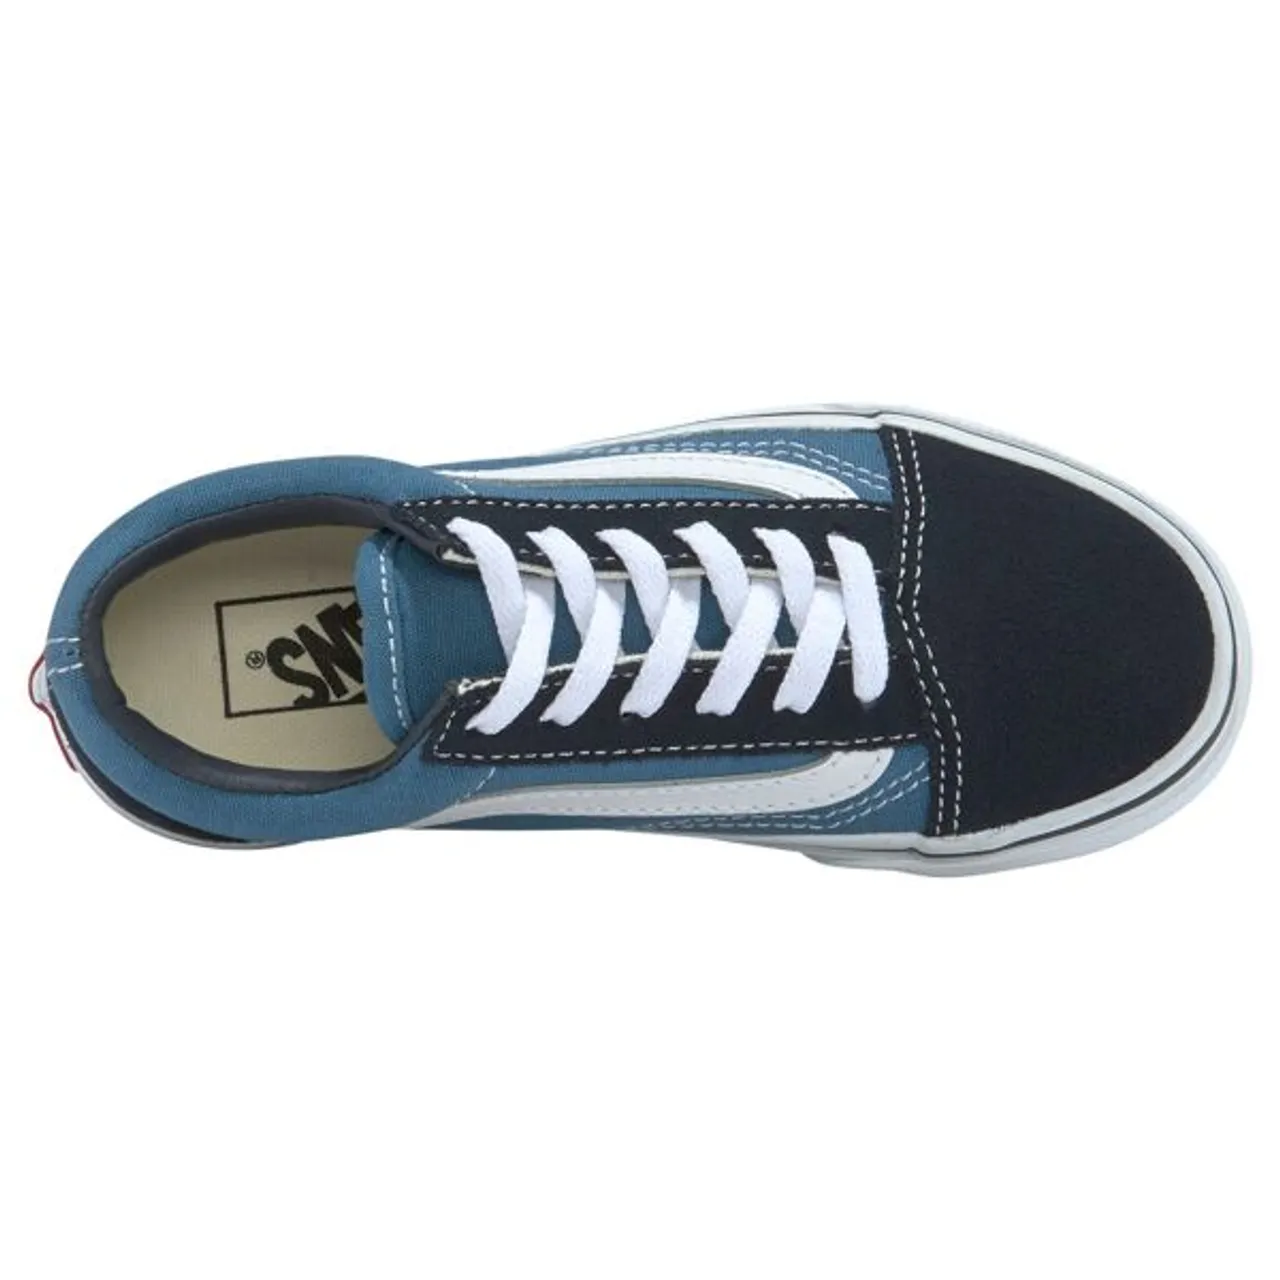 Sneaker VANS "Old Skool" Gr. 27, schwarz (schwarz, blau) Schuhe Sneaker